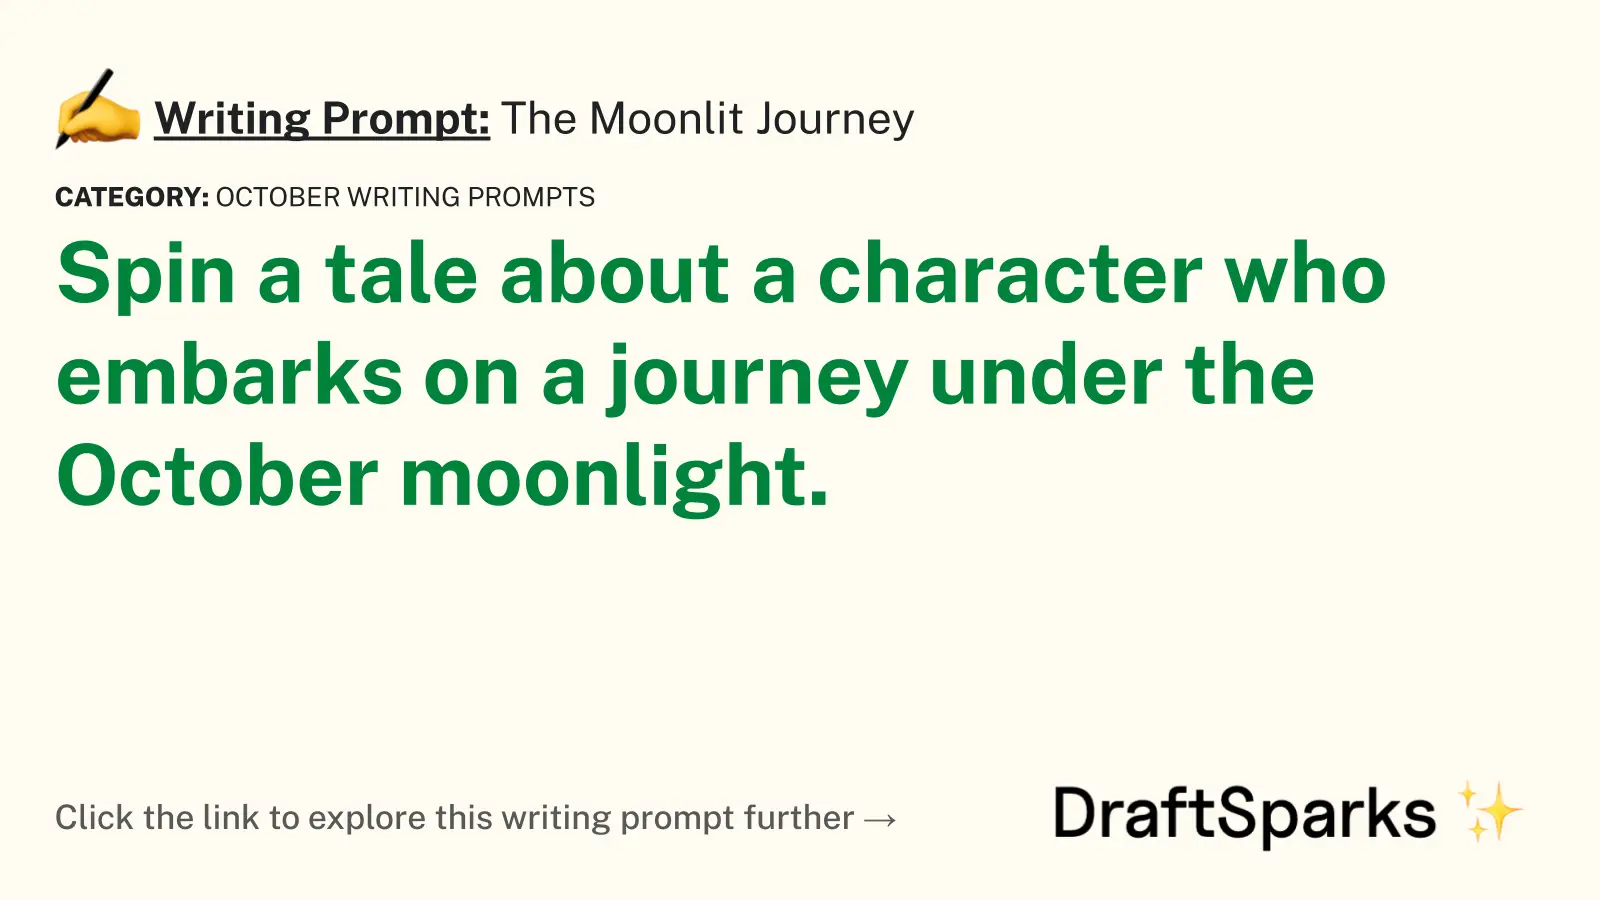 The Moonlit Journey